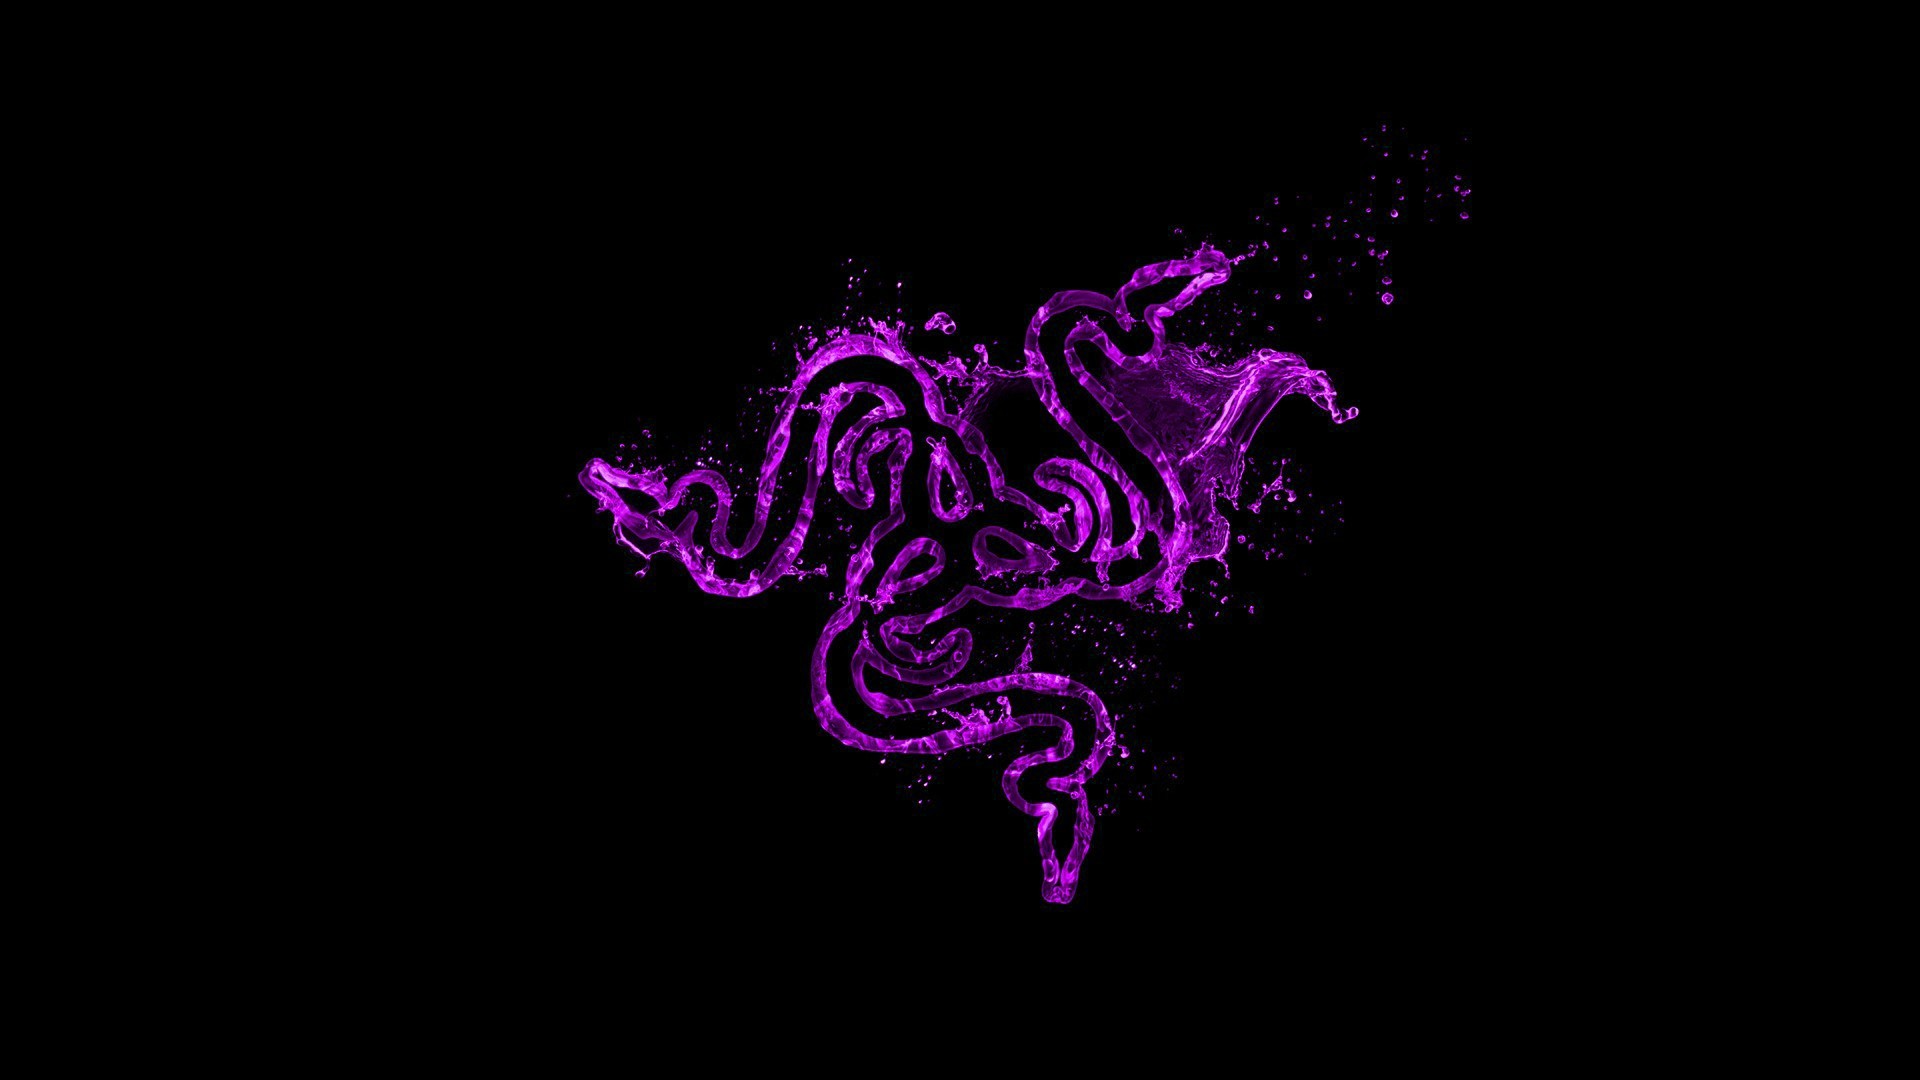 General 1920x1080 Razer video games computer digital art shapes minimalism purple black background